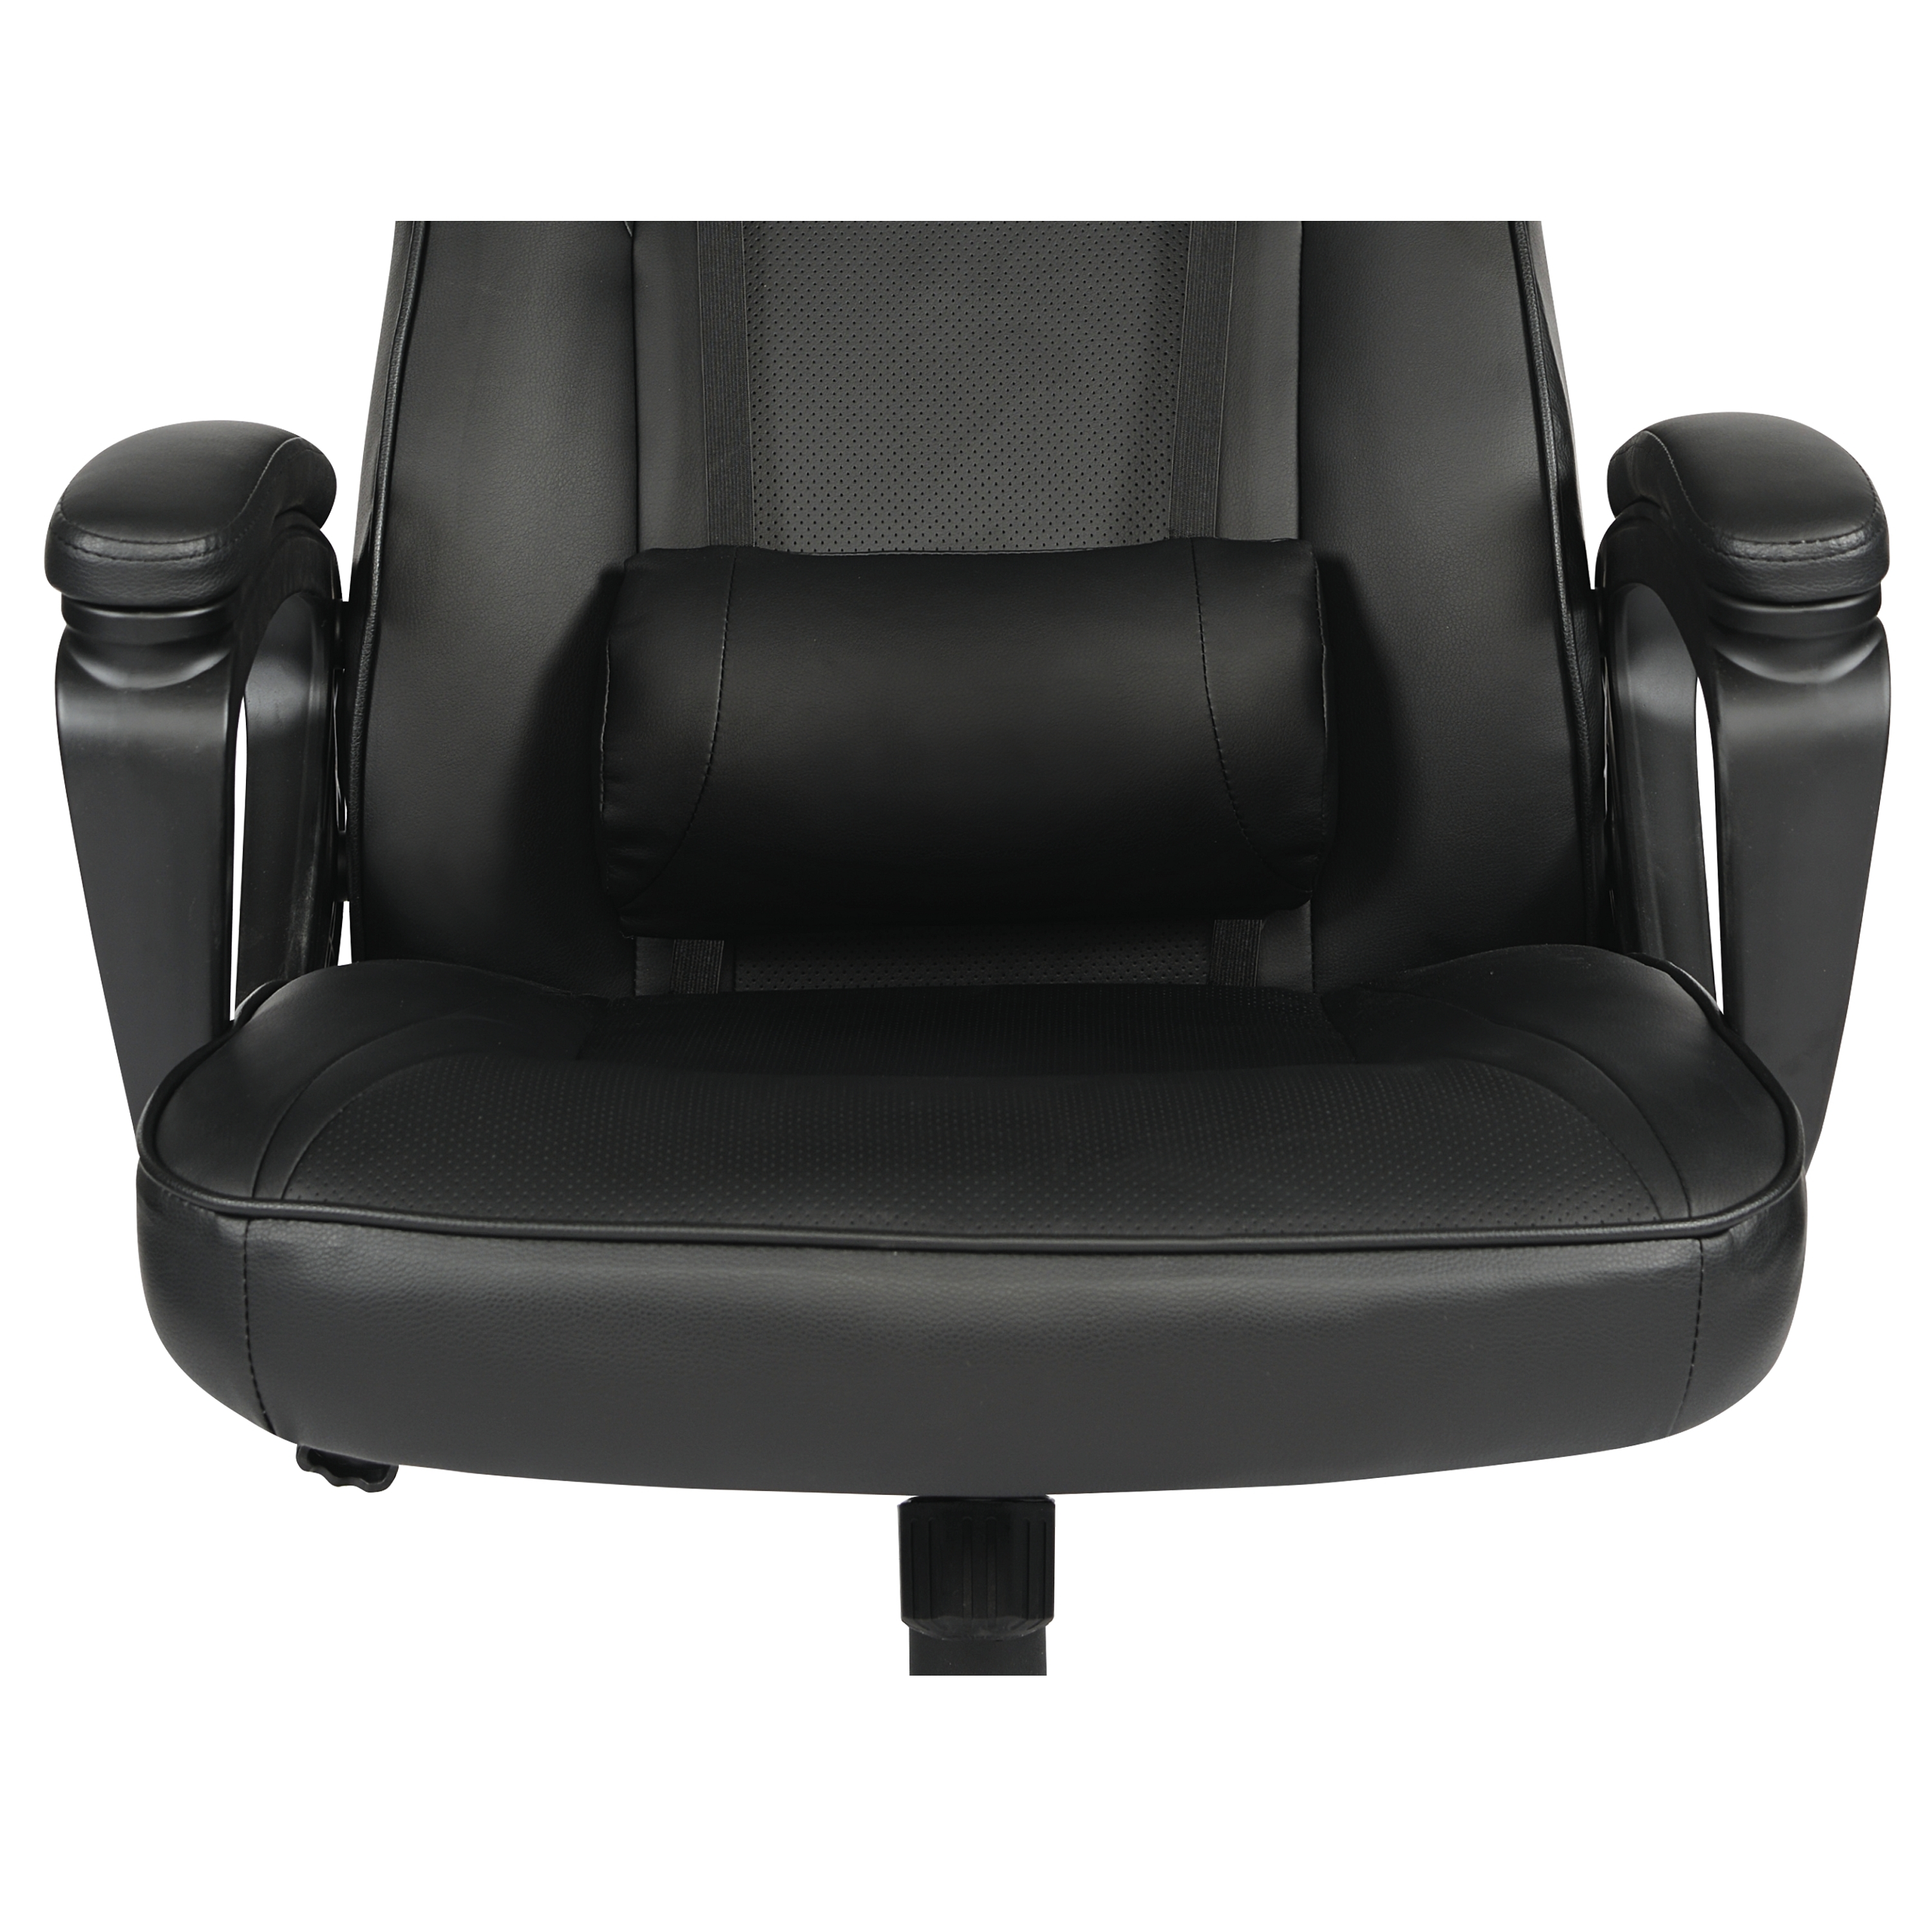 L33T Stuhl, schwarz Gaming 160565